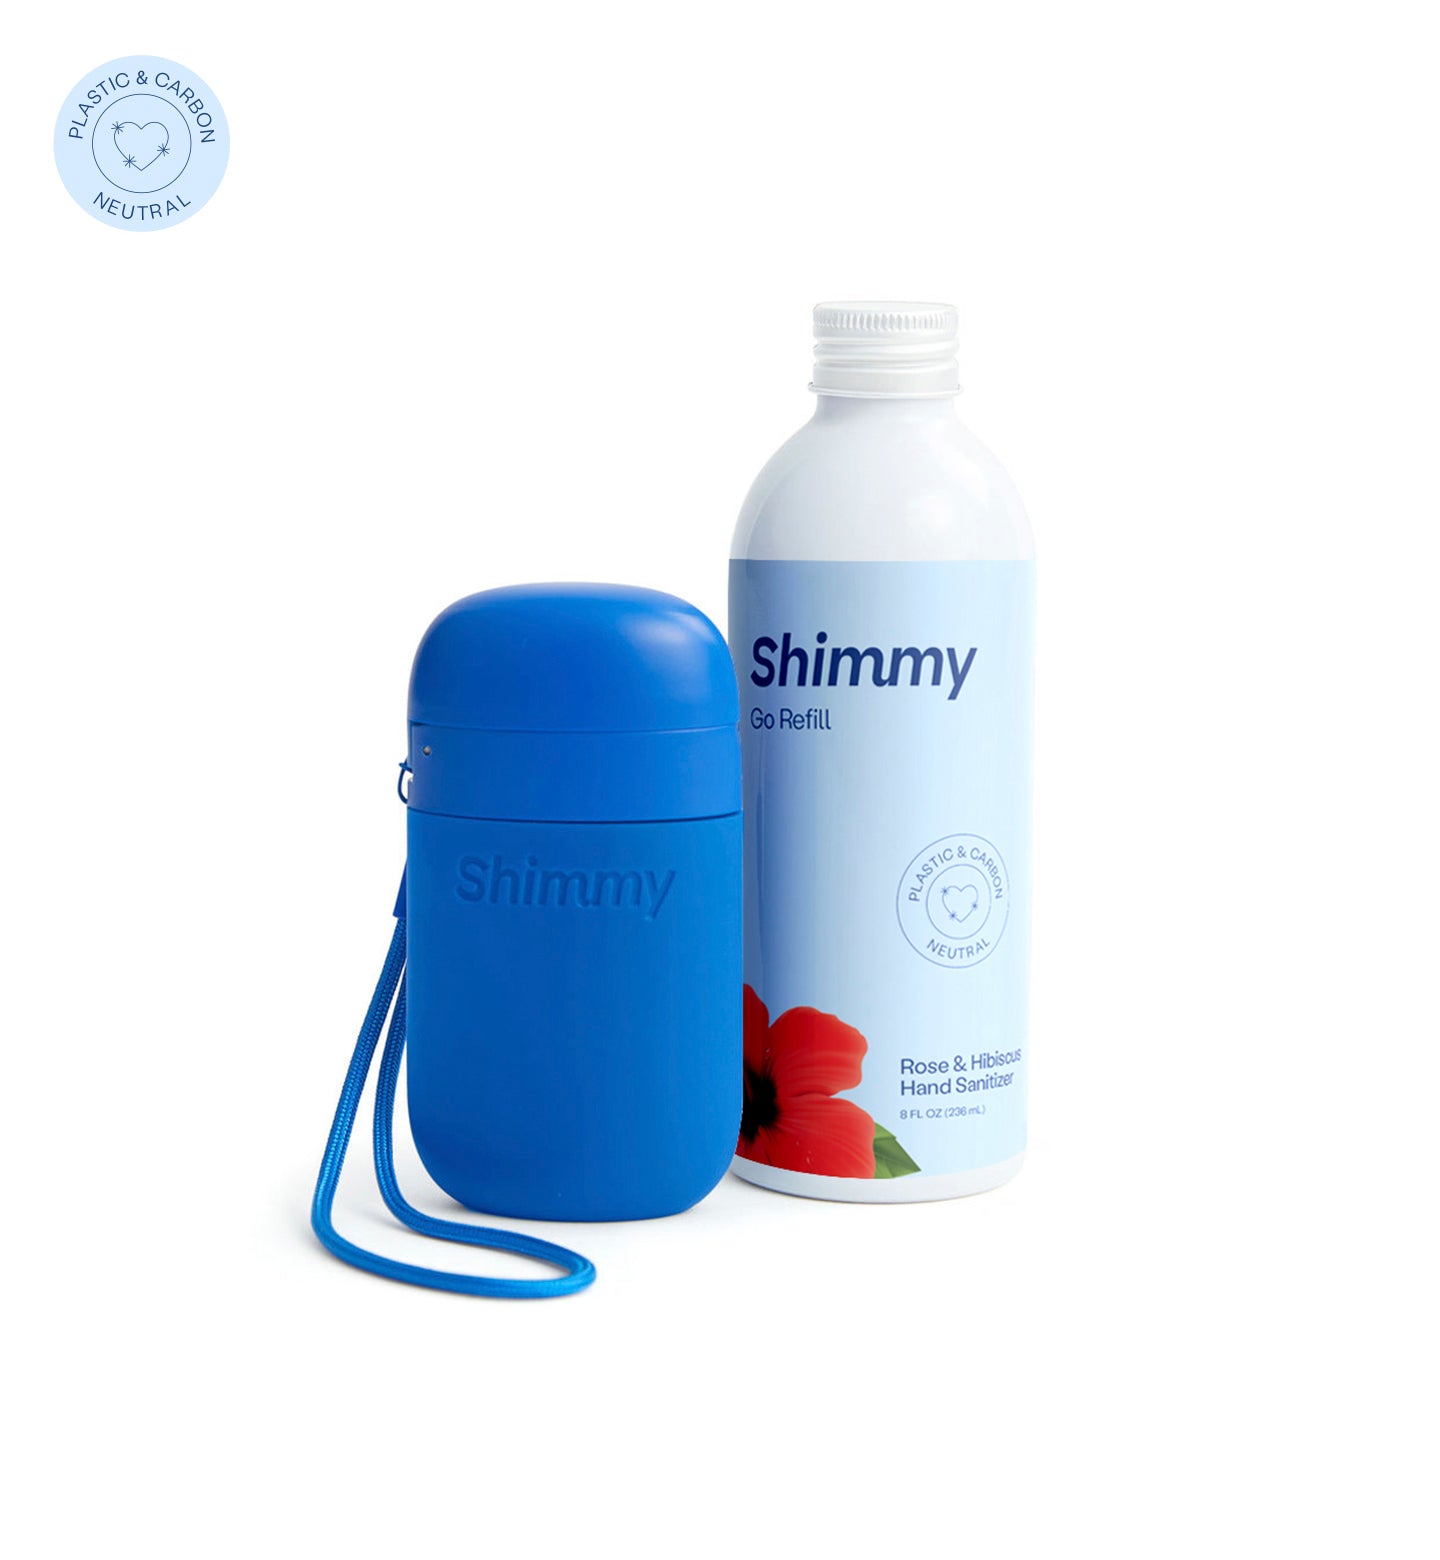 Shimmy Go Portable Hand Sanitizer Dispenser Navy Blue + Rose & Hibiscus Hand Sanitizer [40734787469503] - 40734787469503